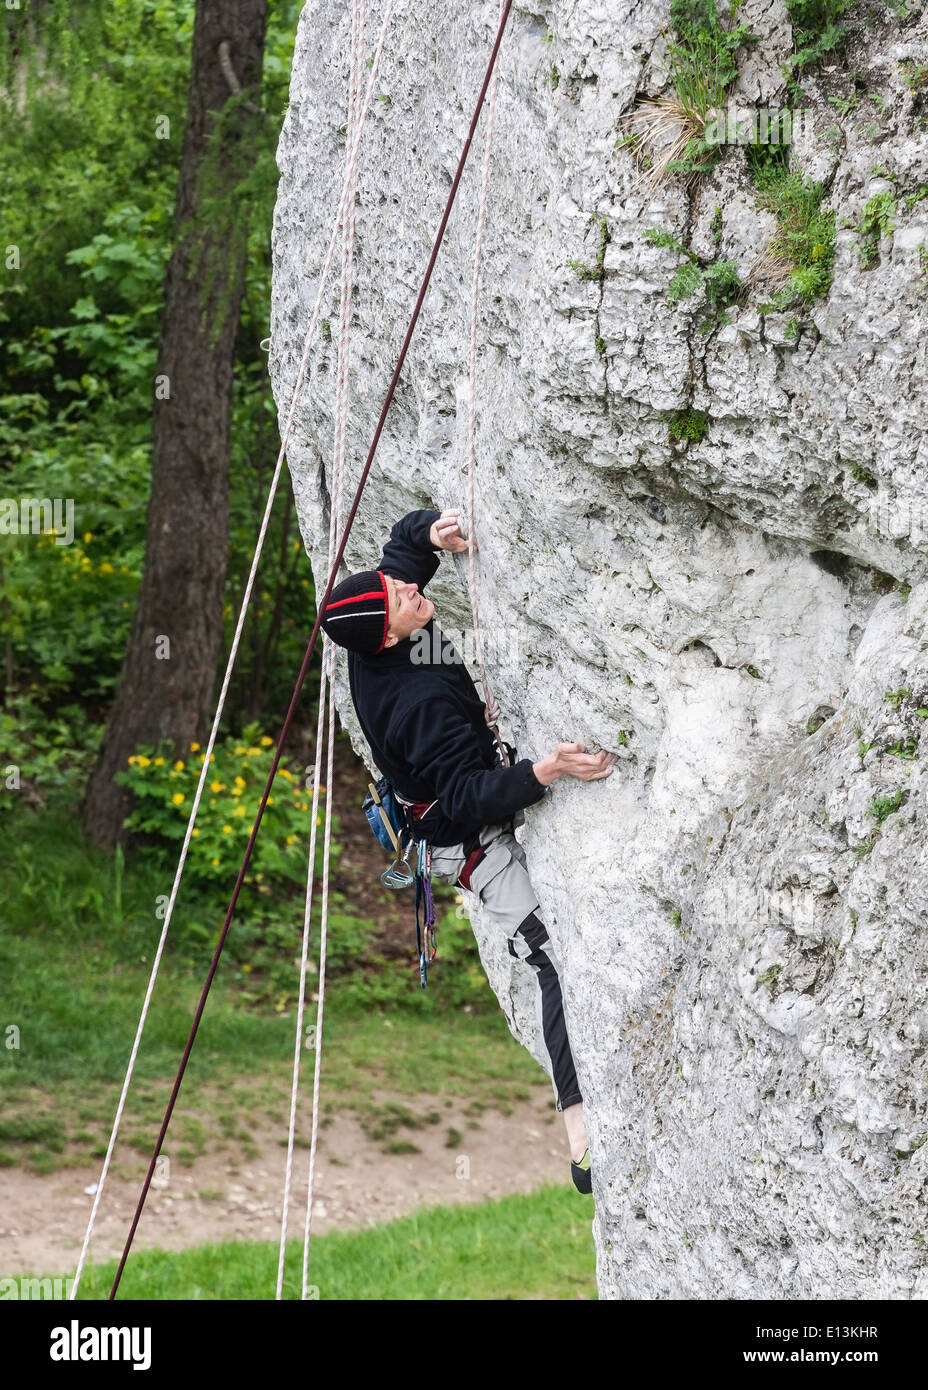 Man climbing rocky wall. Stock Photo